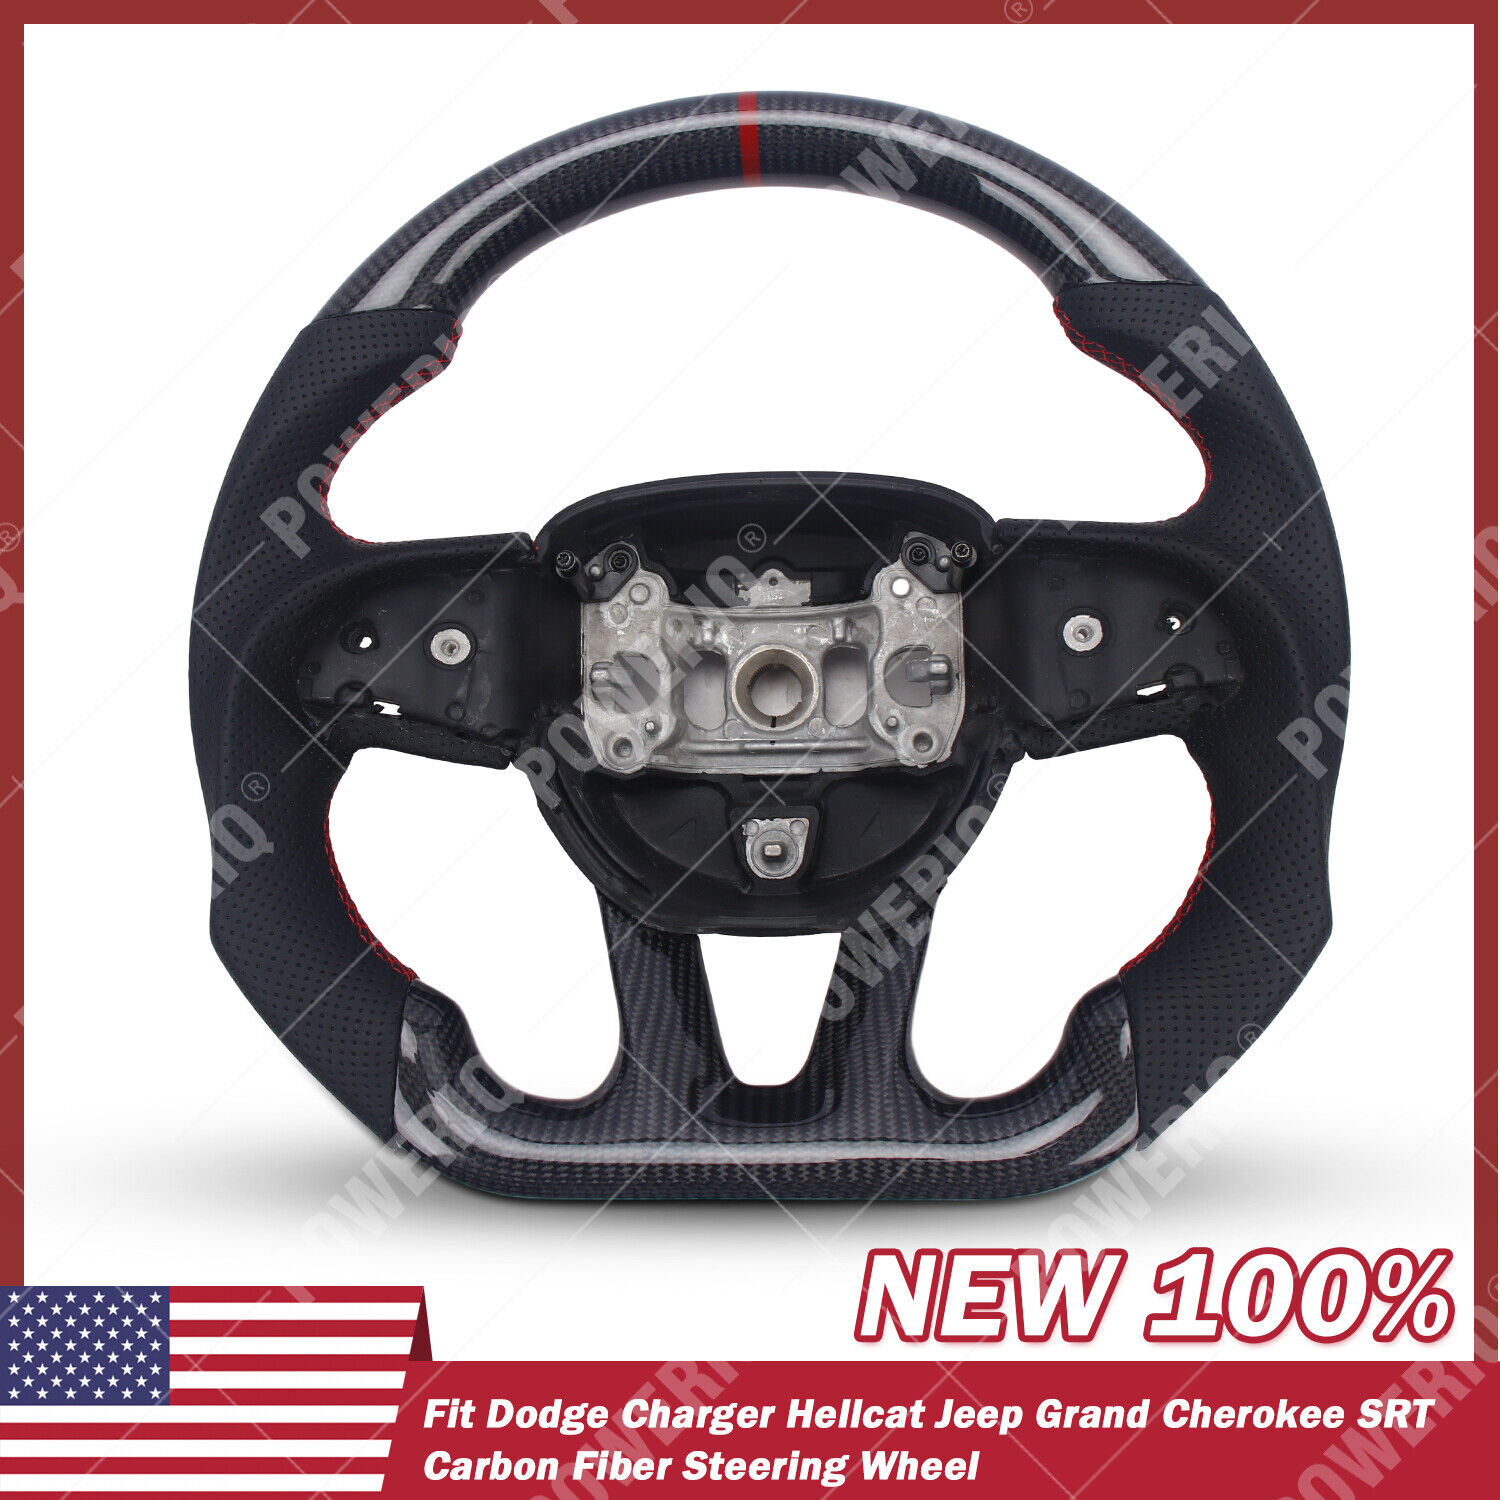 Fit Dodge Charger Hellcat Jeep Grand Cherokee SRT Carbon Fiber Steering Wheel us